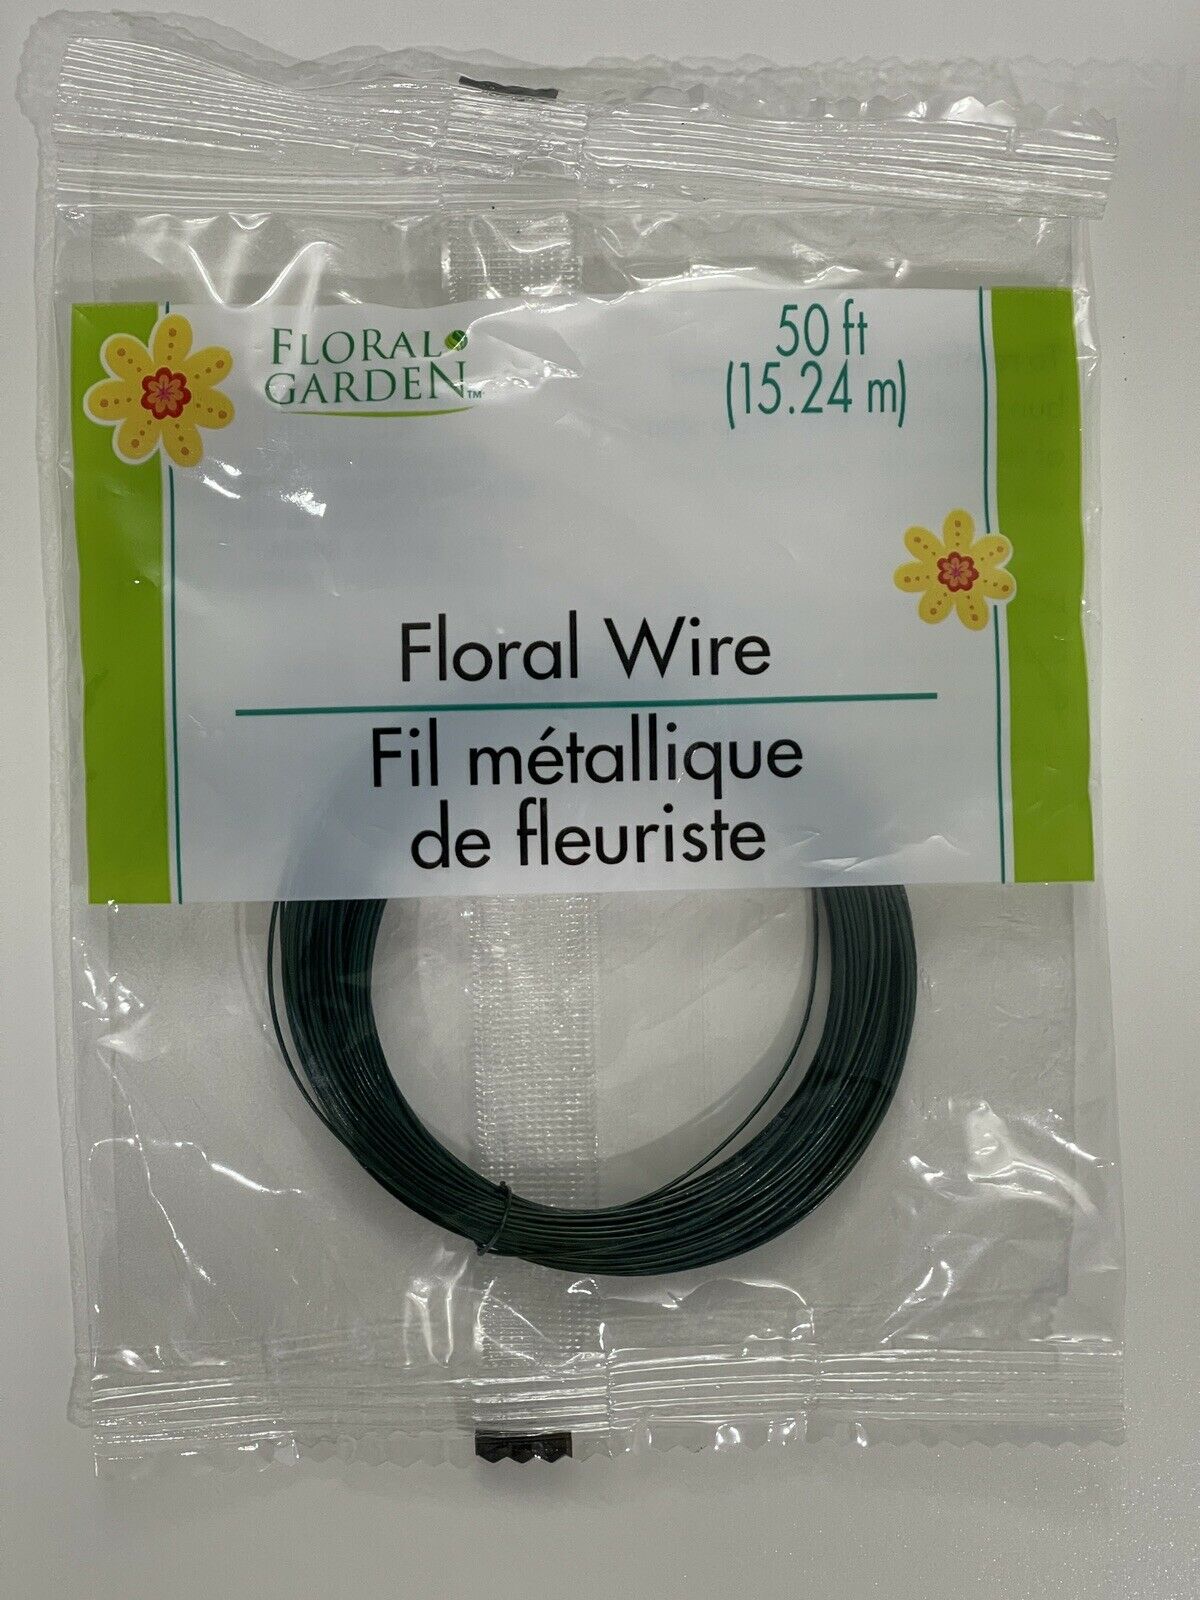 Floral Garden 50 Ft. Floral Wire